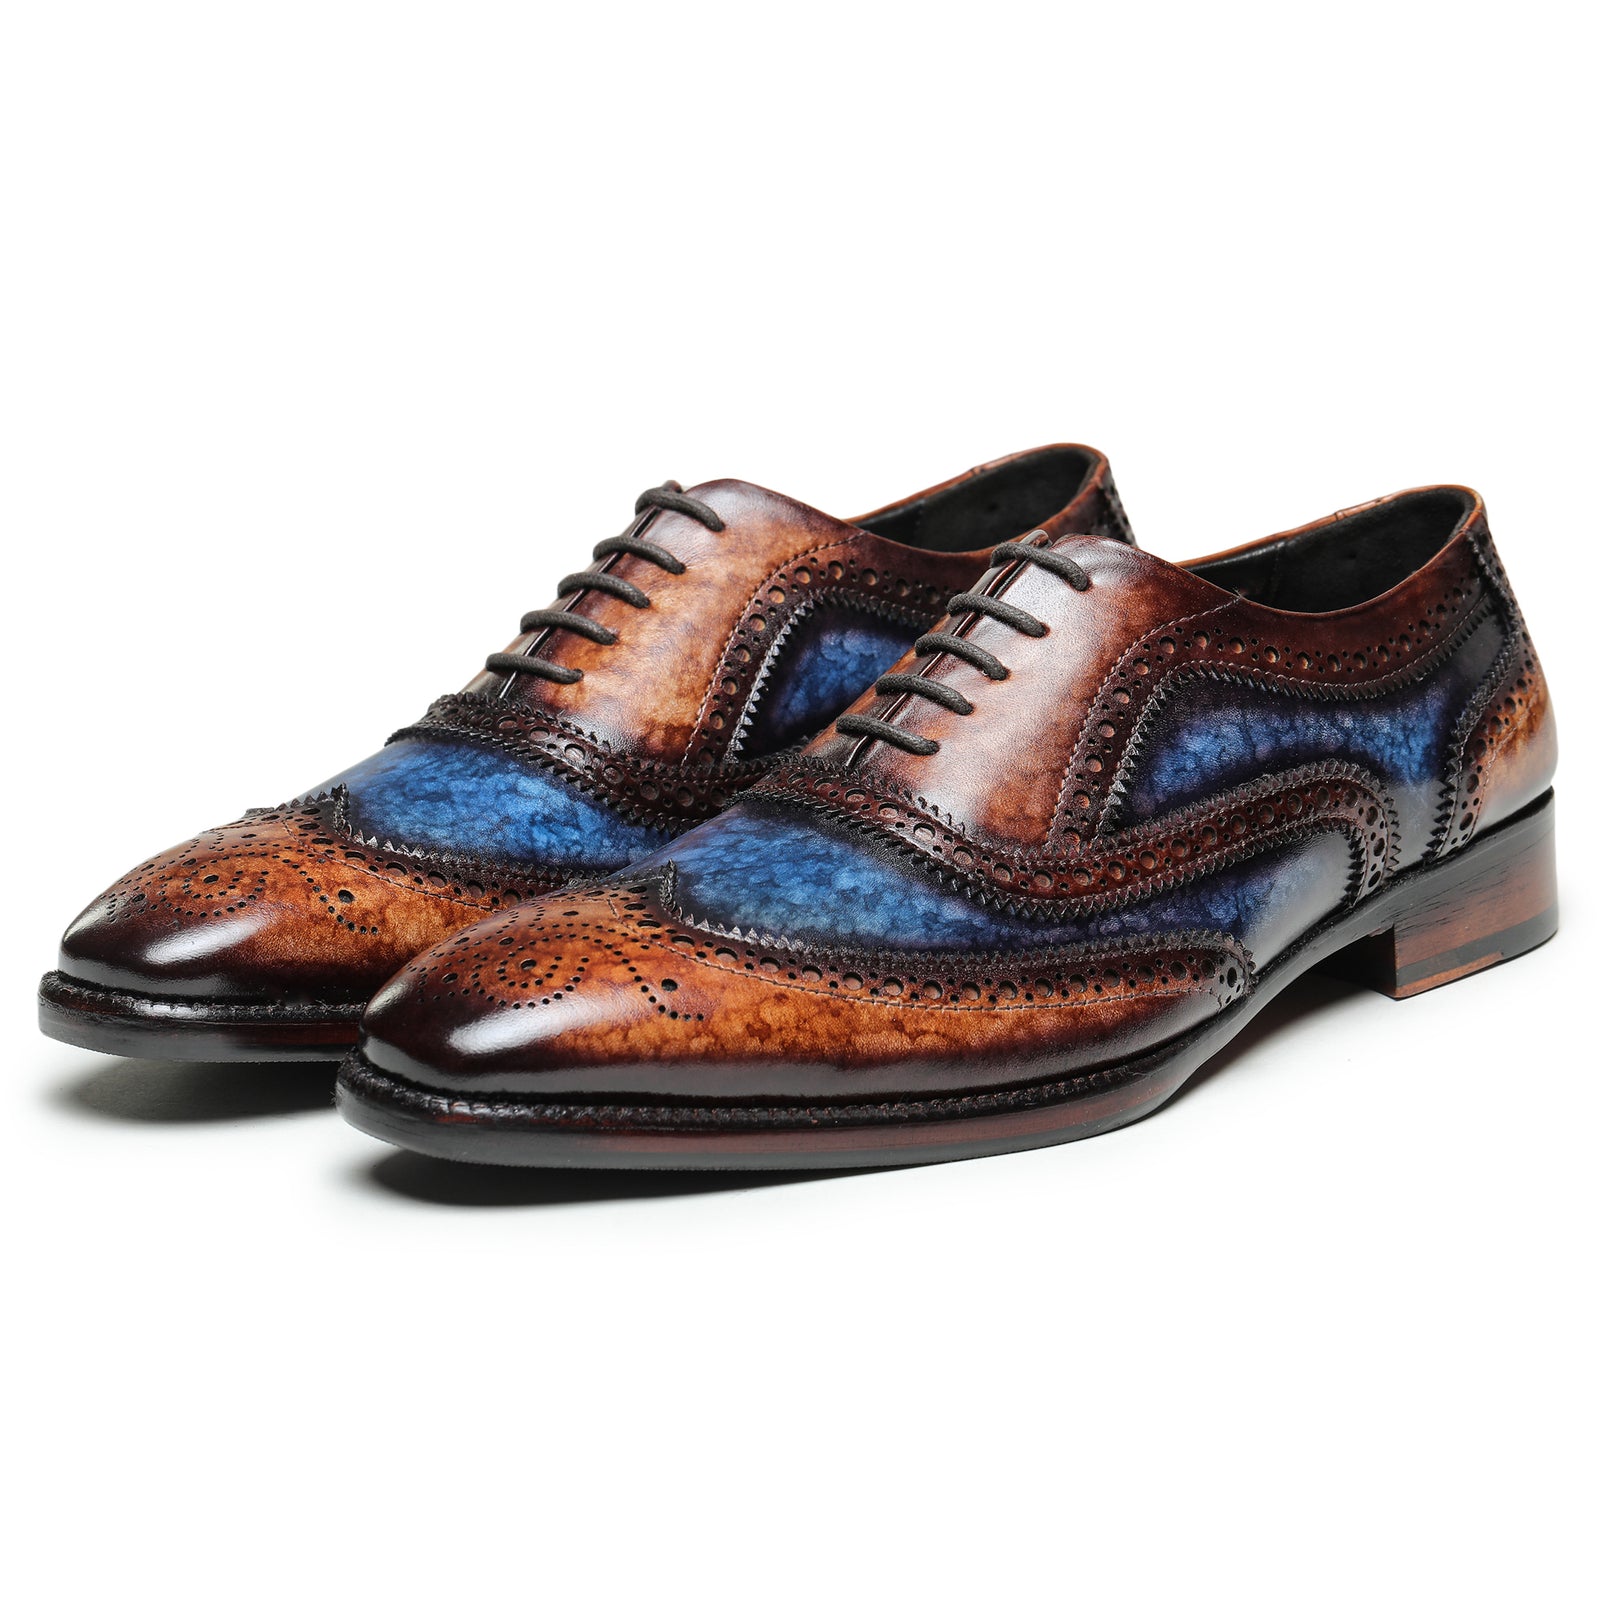 Wholesale Clafskin Leather Luxury Designer Replica Shoes Men